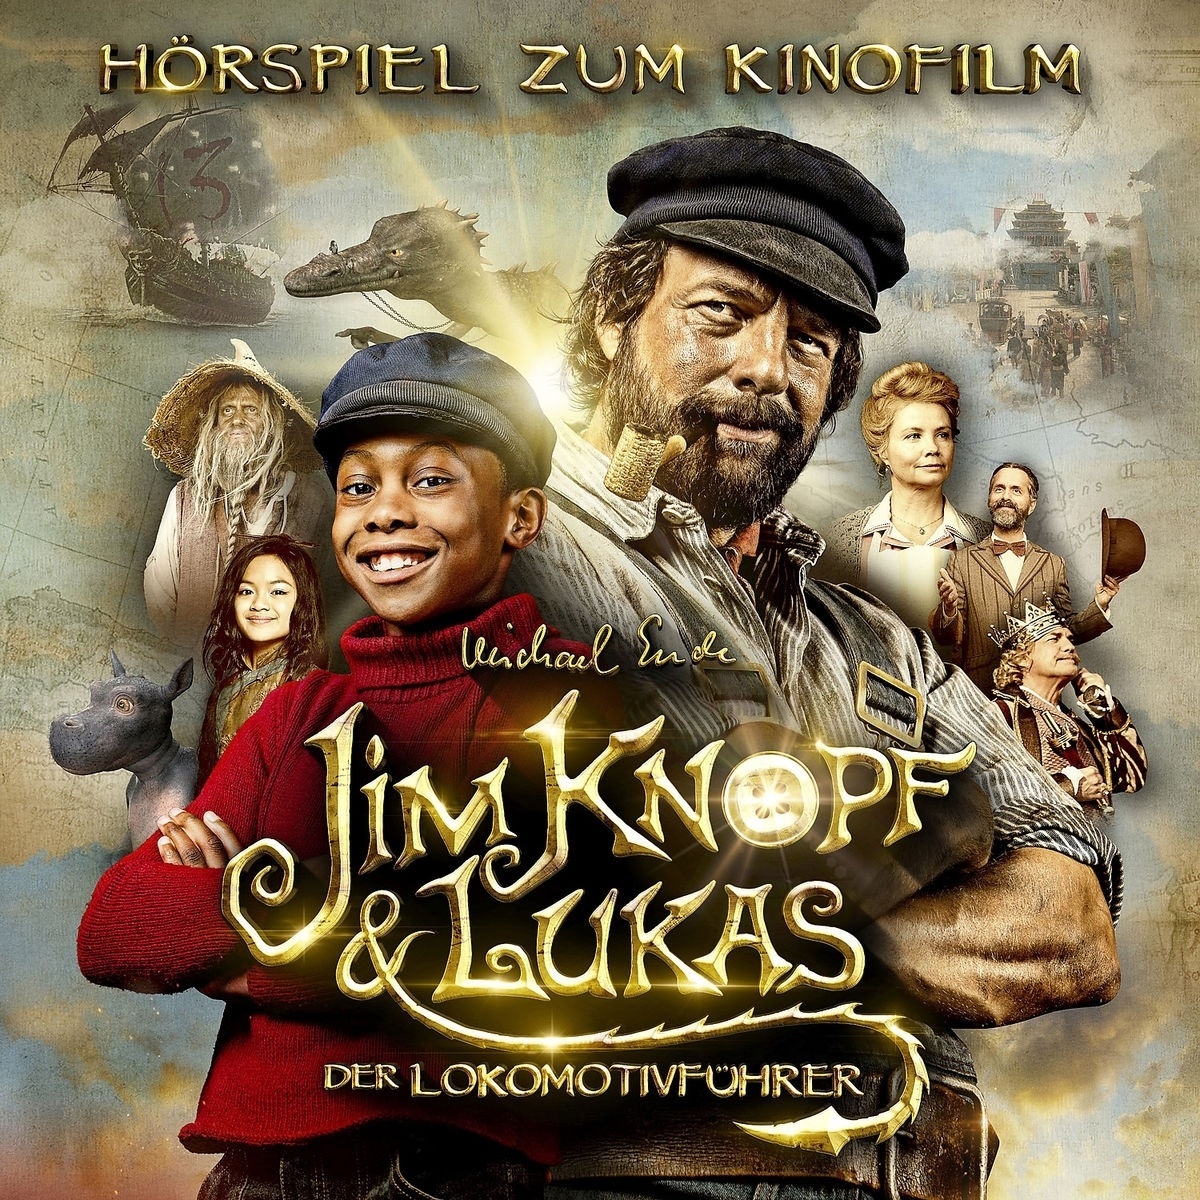 Jim Knopf (Das Original Hörspiel Zum Kinofilm) - Jim Knopf Und Lukas Der Lokomotivführer  Jim Knopf und Lukas der Lokomotivführer (Hörbuch)